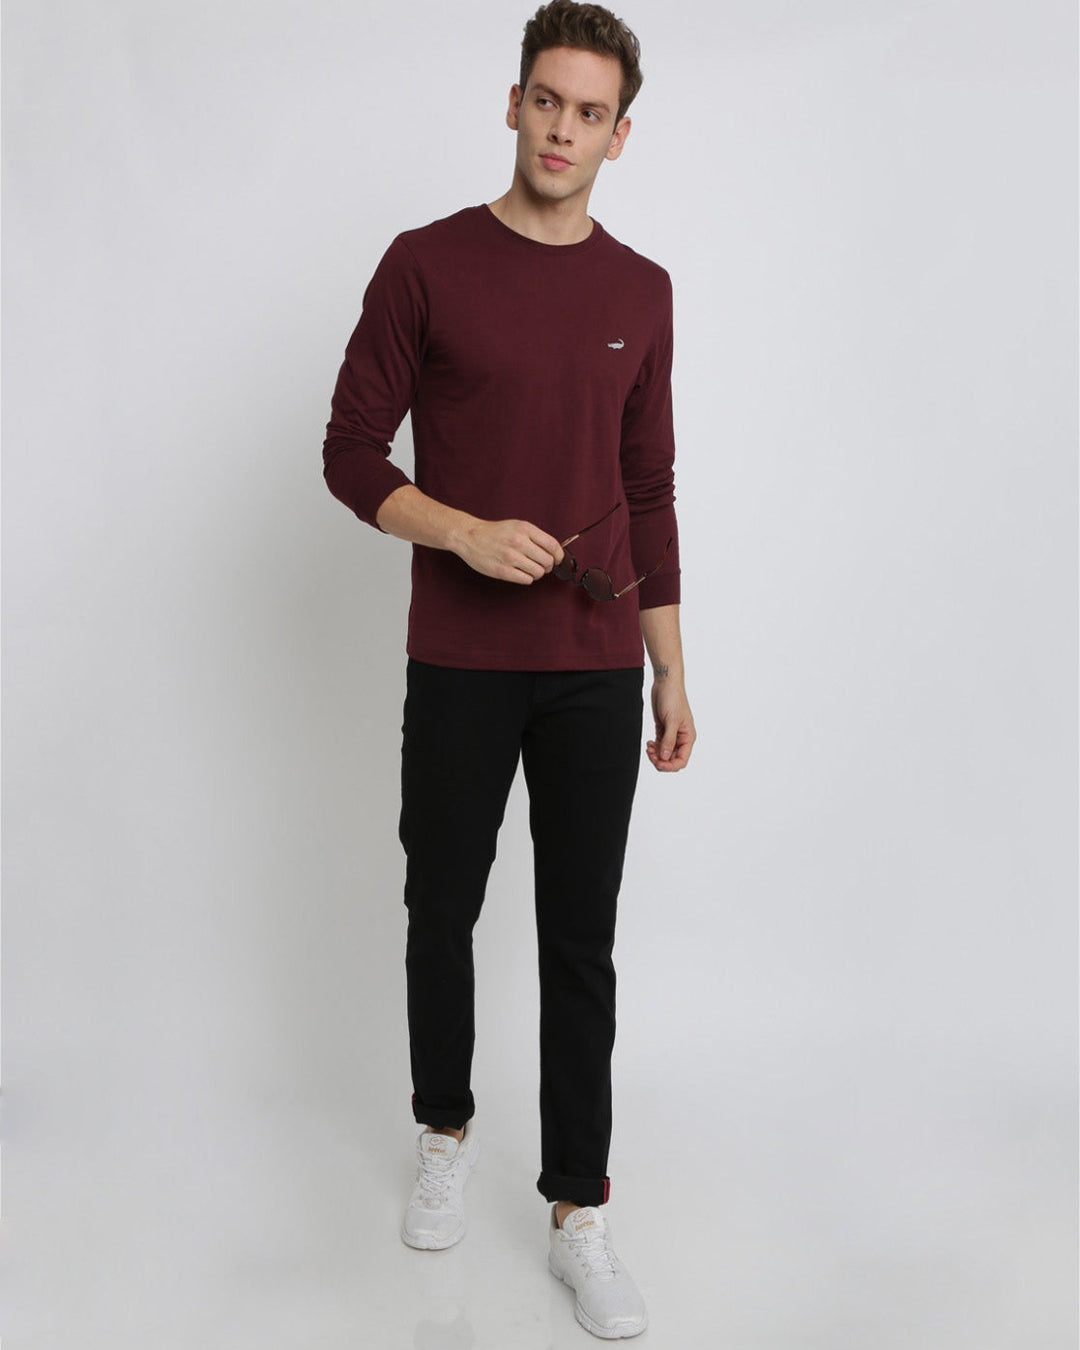 Men's Solid Round Neck Full Sleeve Cotton T-Shirt - WINE